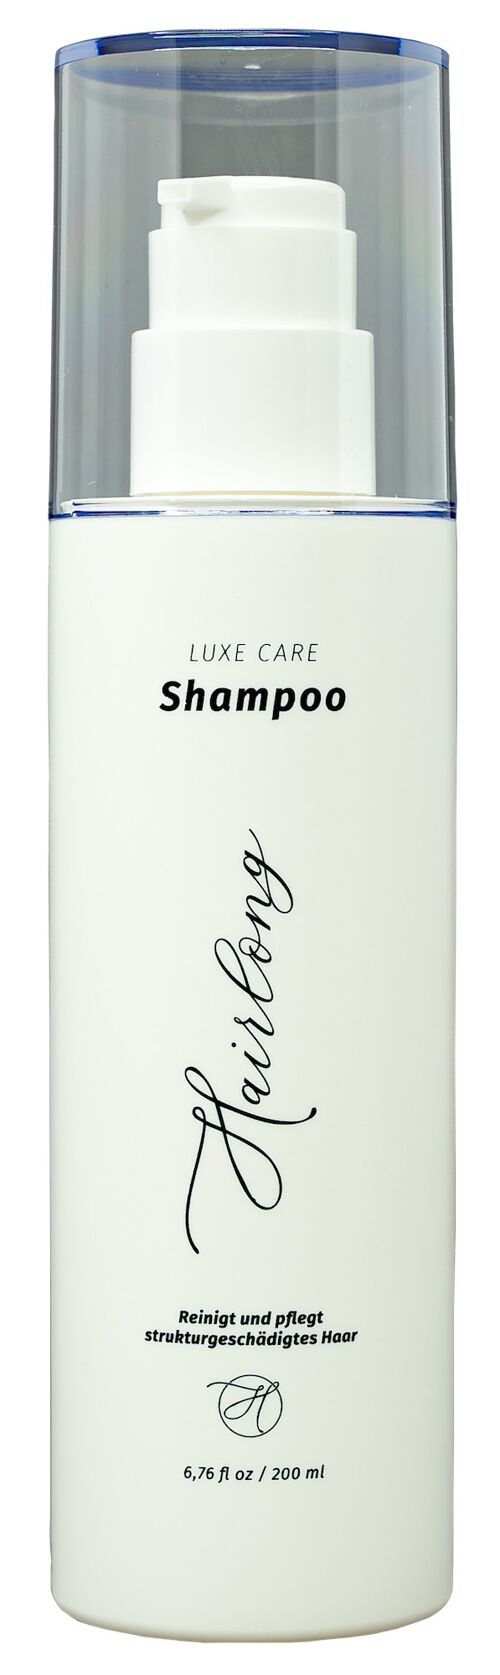 Luxe Care Shampoo